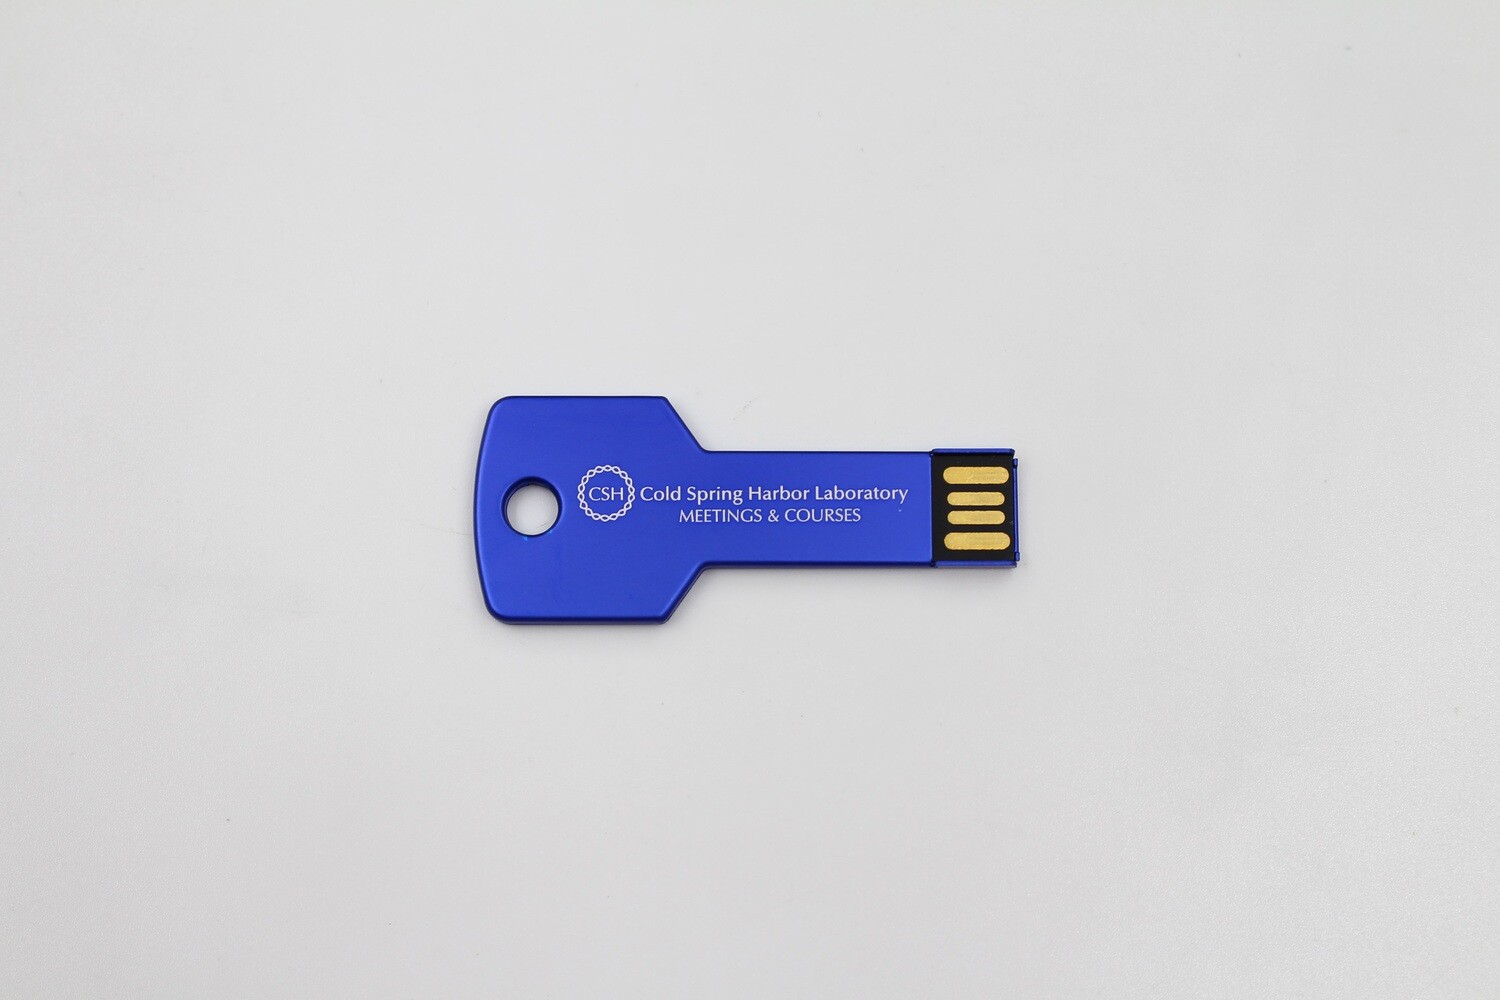 USB Key 32GB